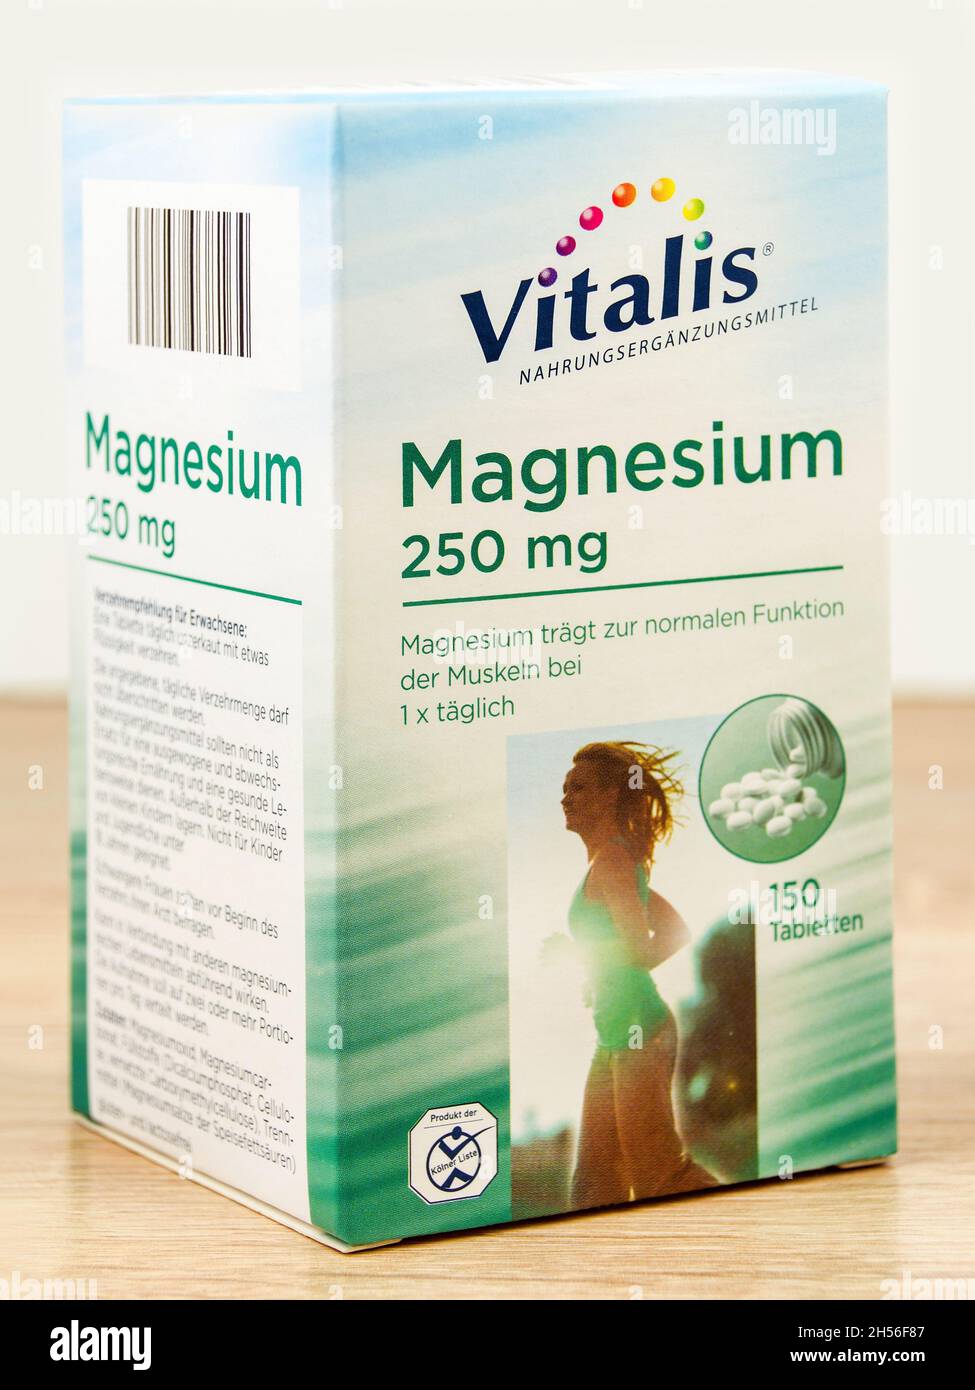 Hamburg, Germany - November 7 2021: Magnesium Nahrungsergänzung und  Verpackung Vitalis Stock Photo - Alamy